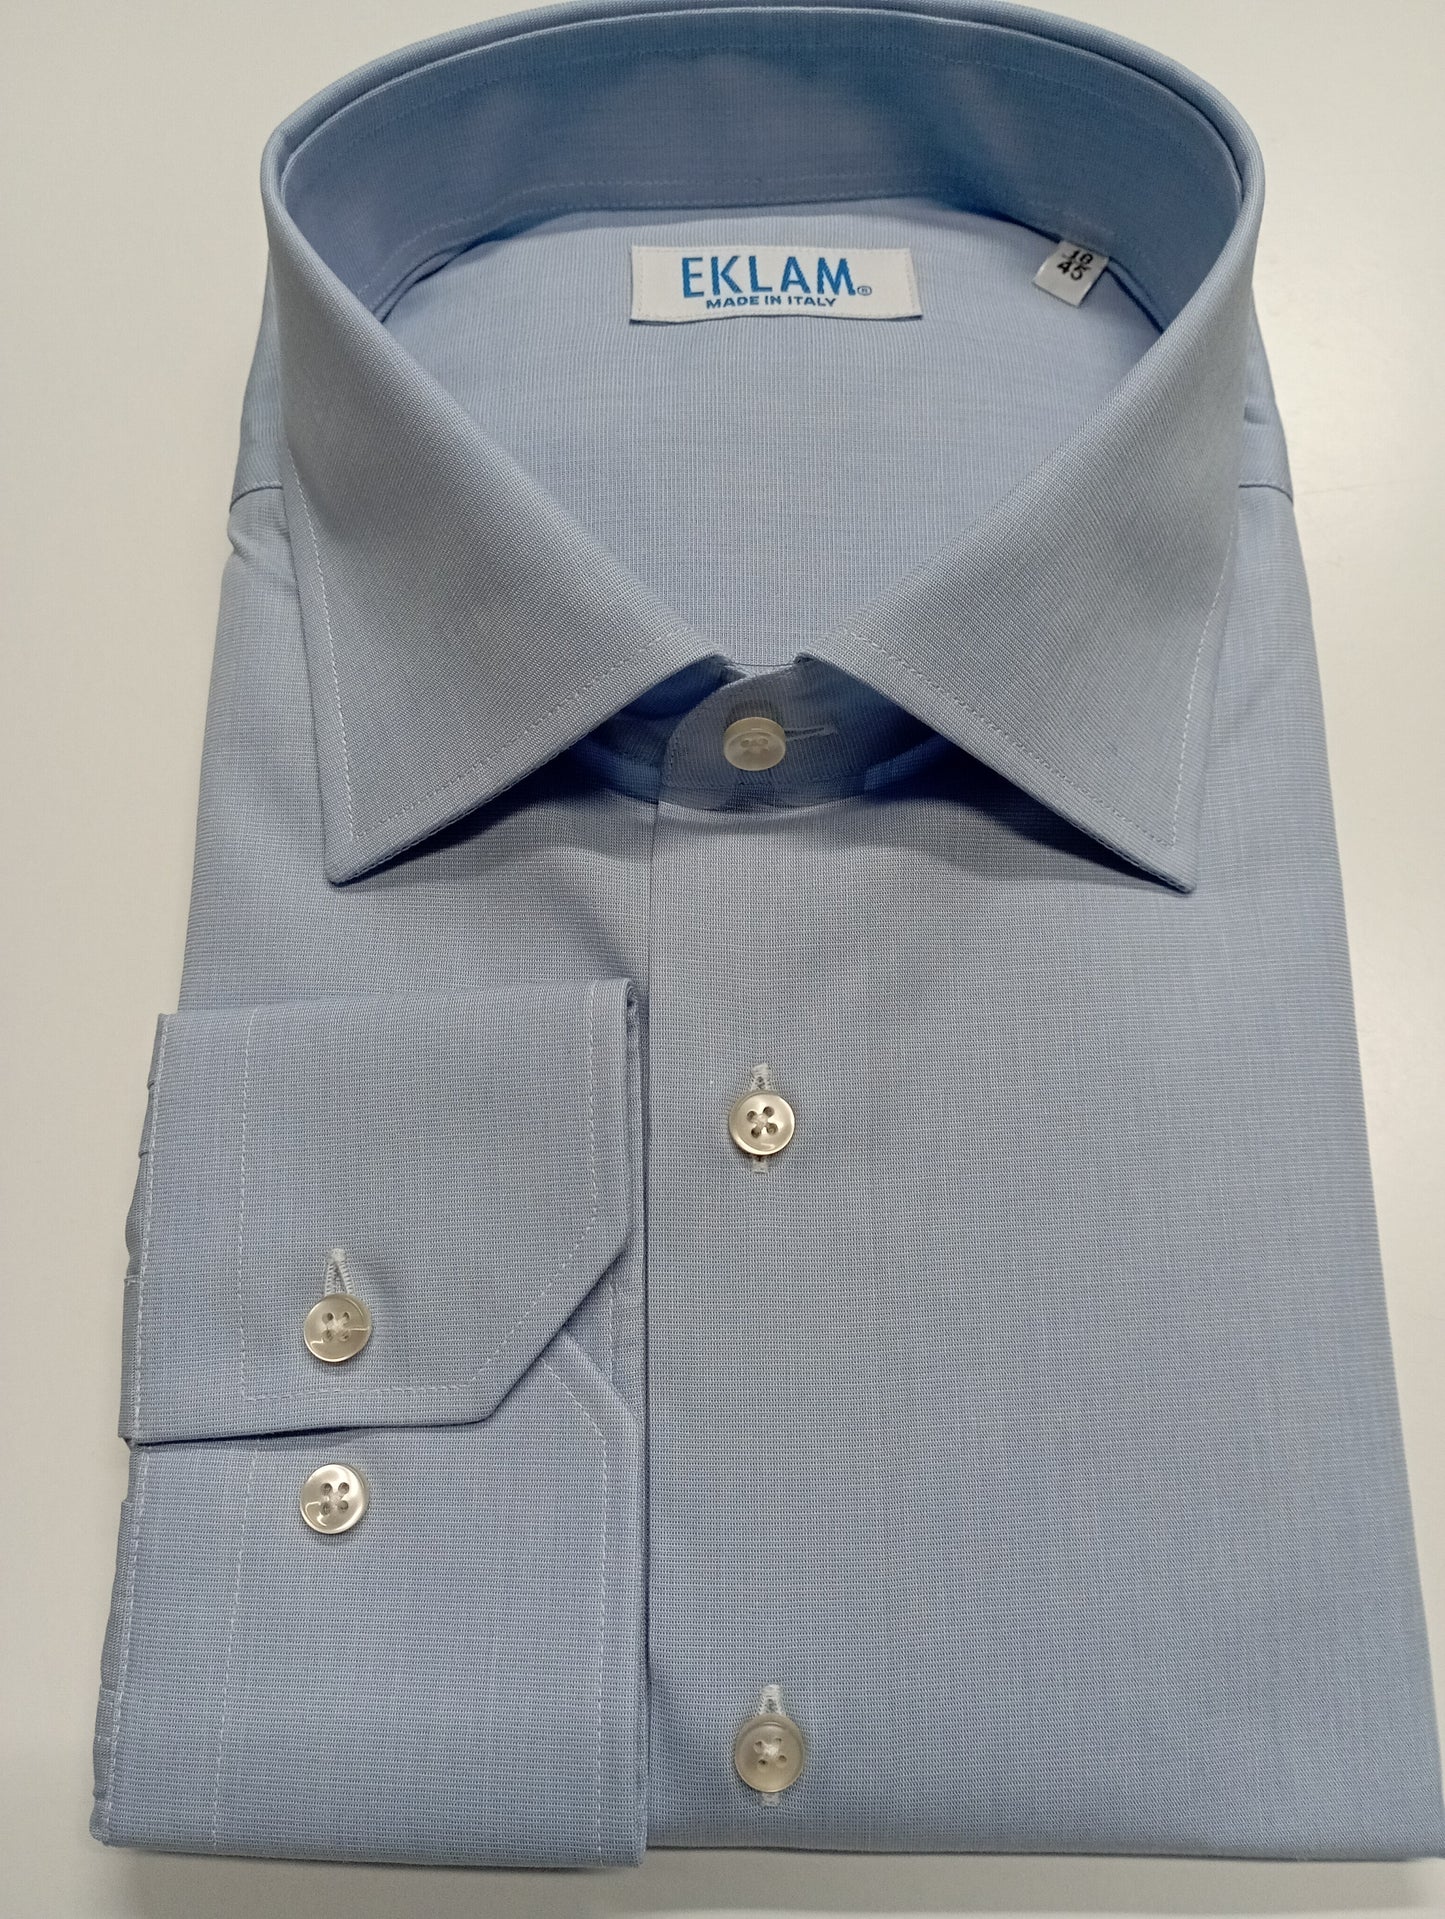 Men's shirt with spread collar